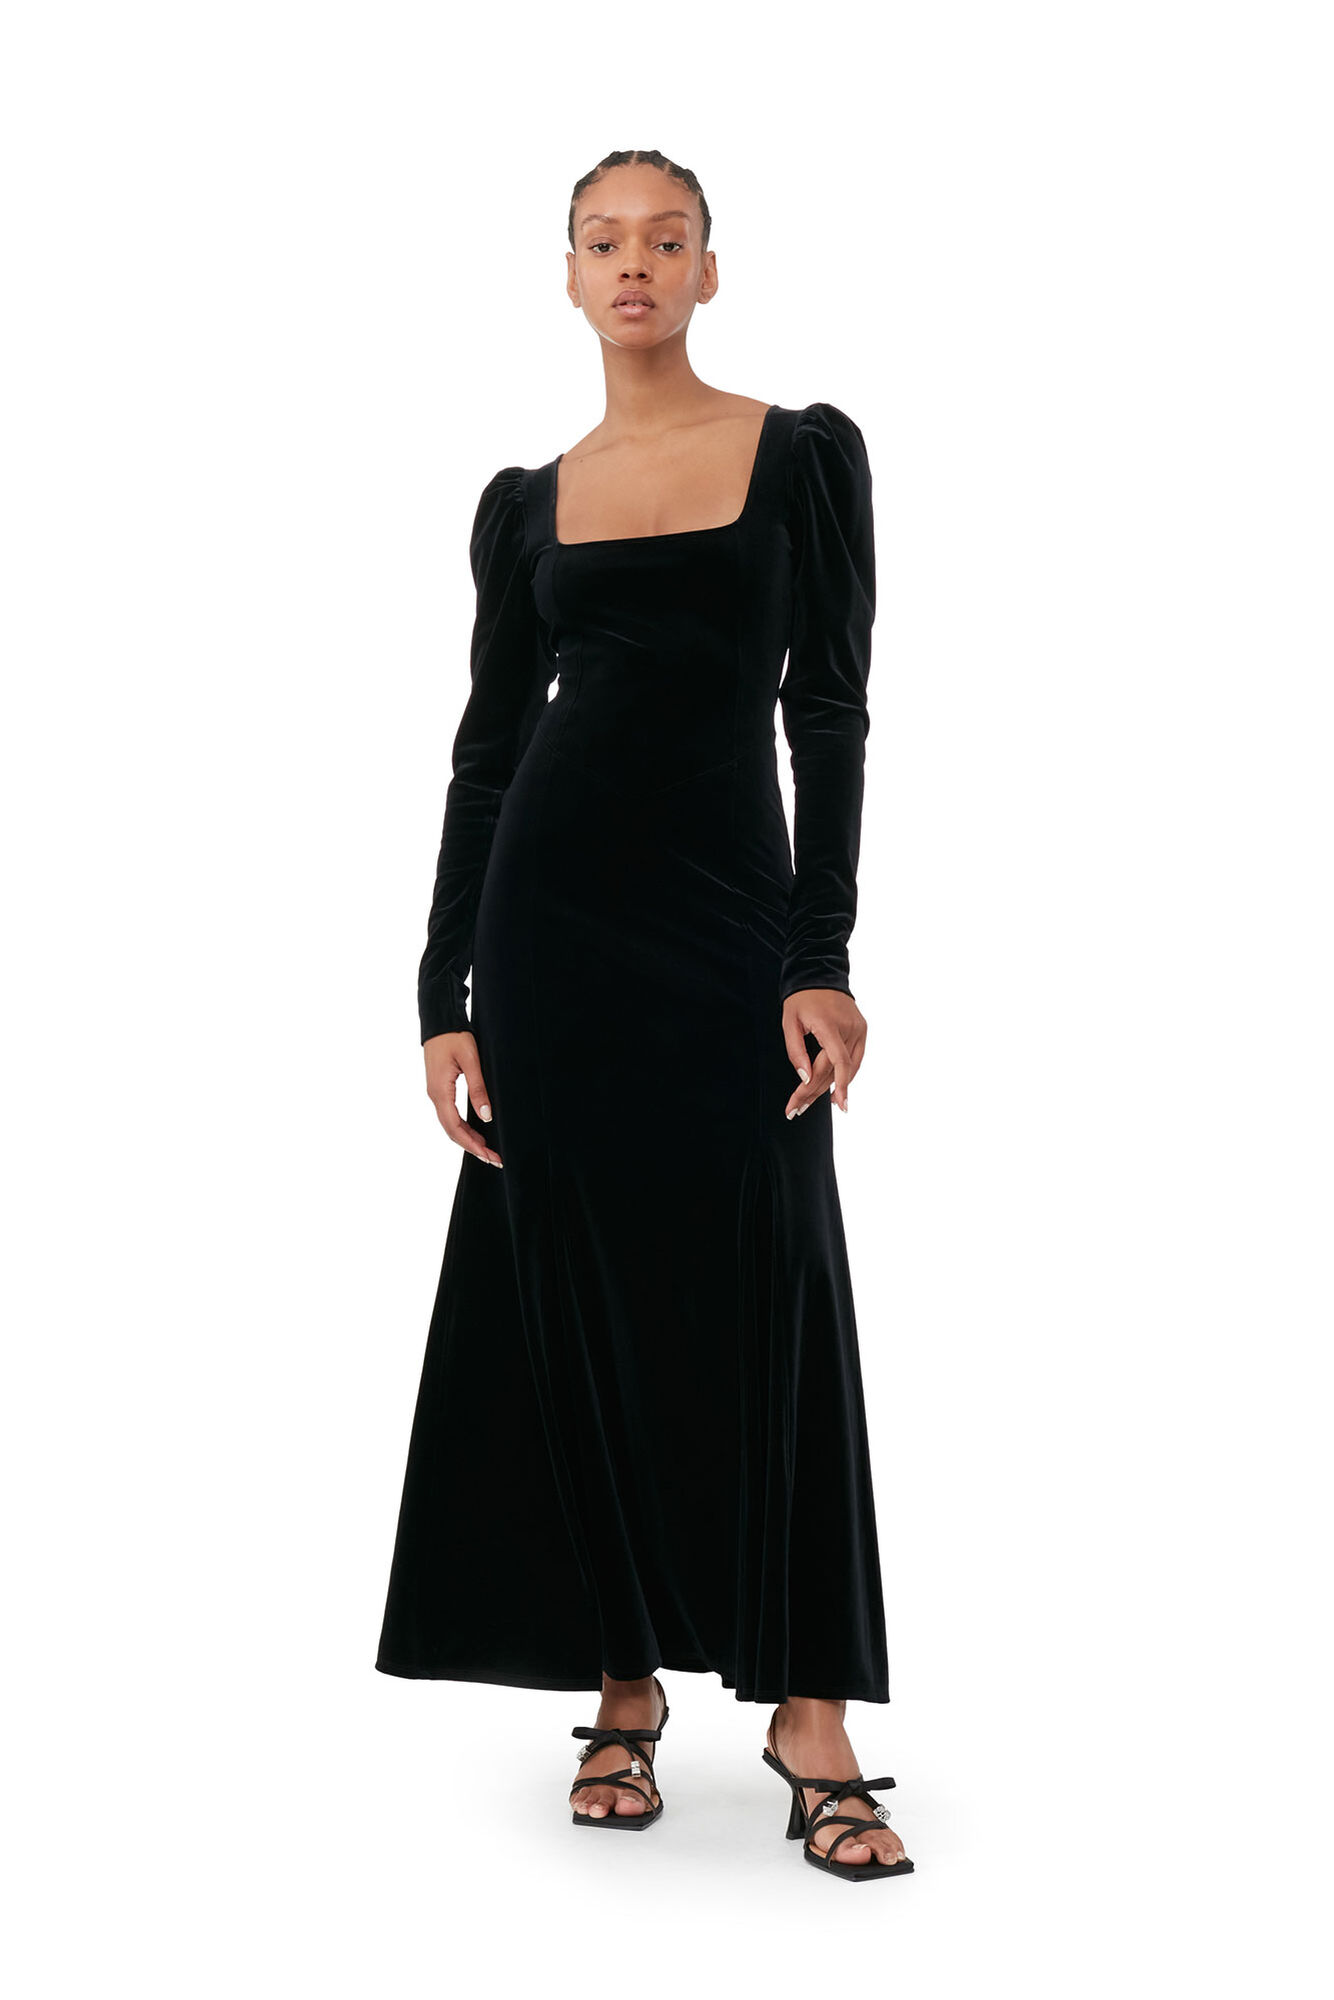 Ganni Black Velvet Jersey Maxi Dress